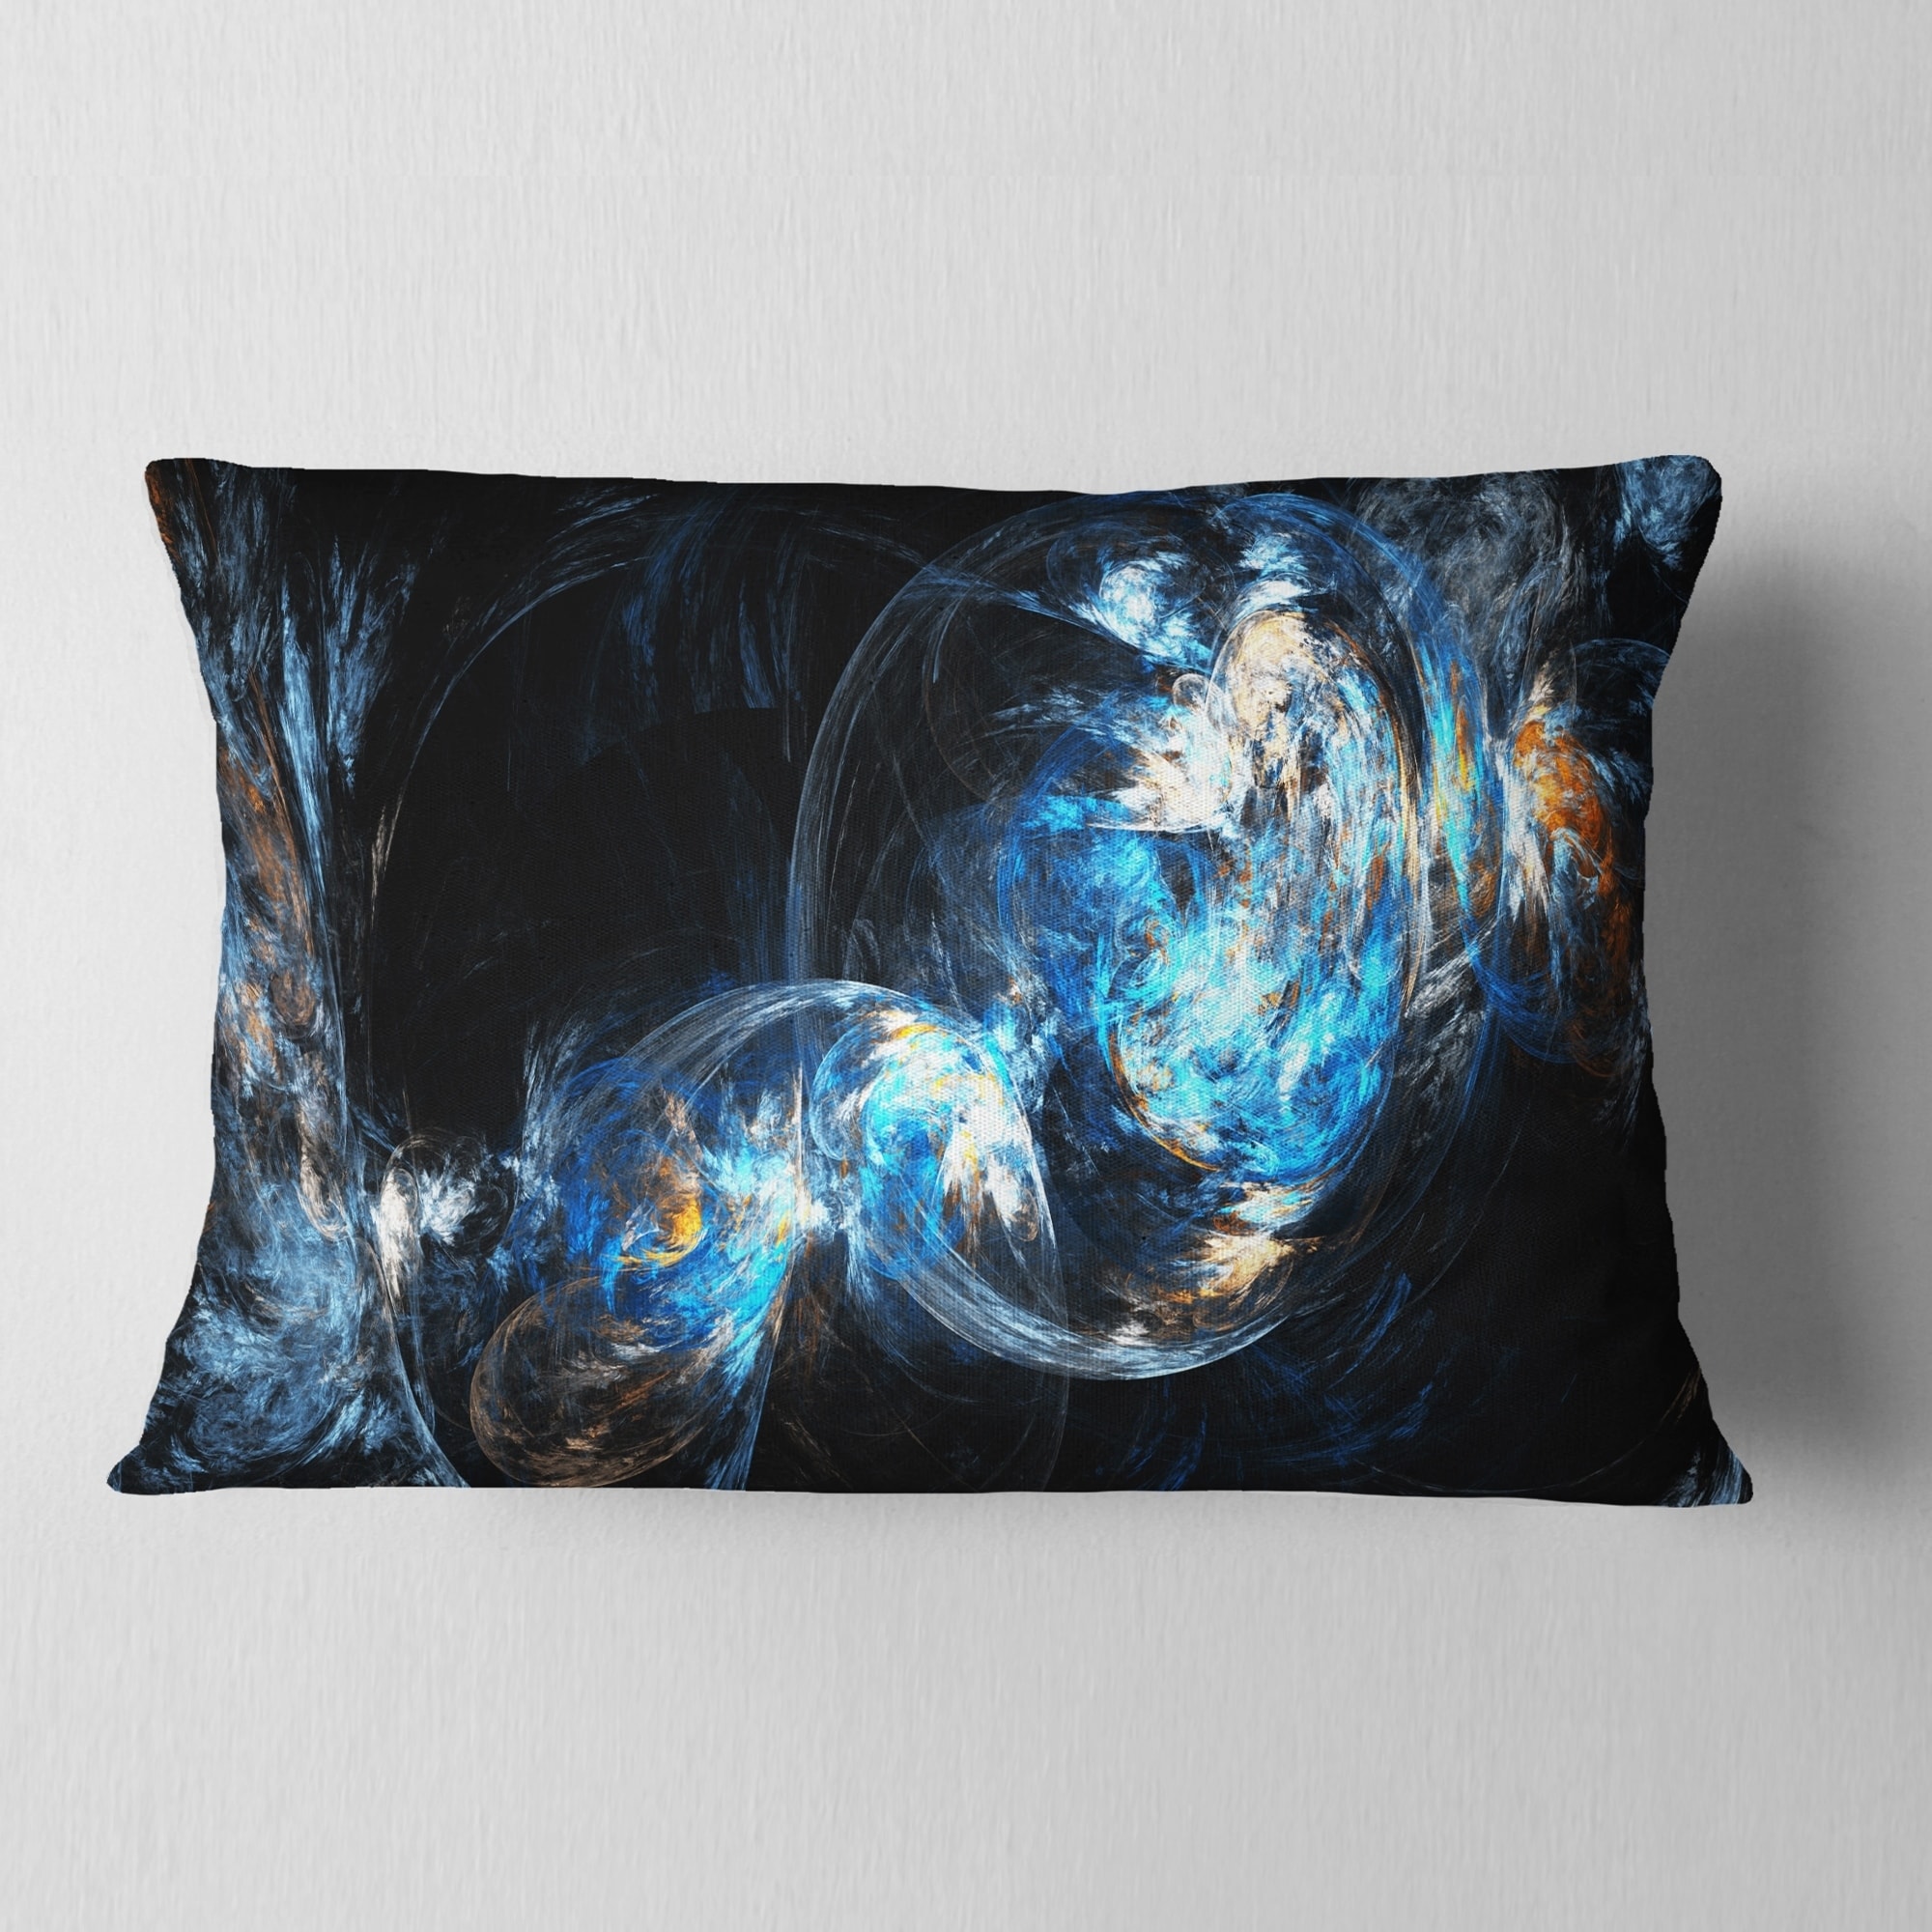 Designart 'Colored Smoke Blue' Abstract Throw Pillow